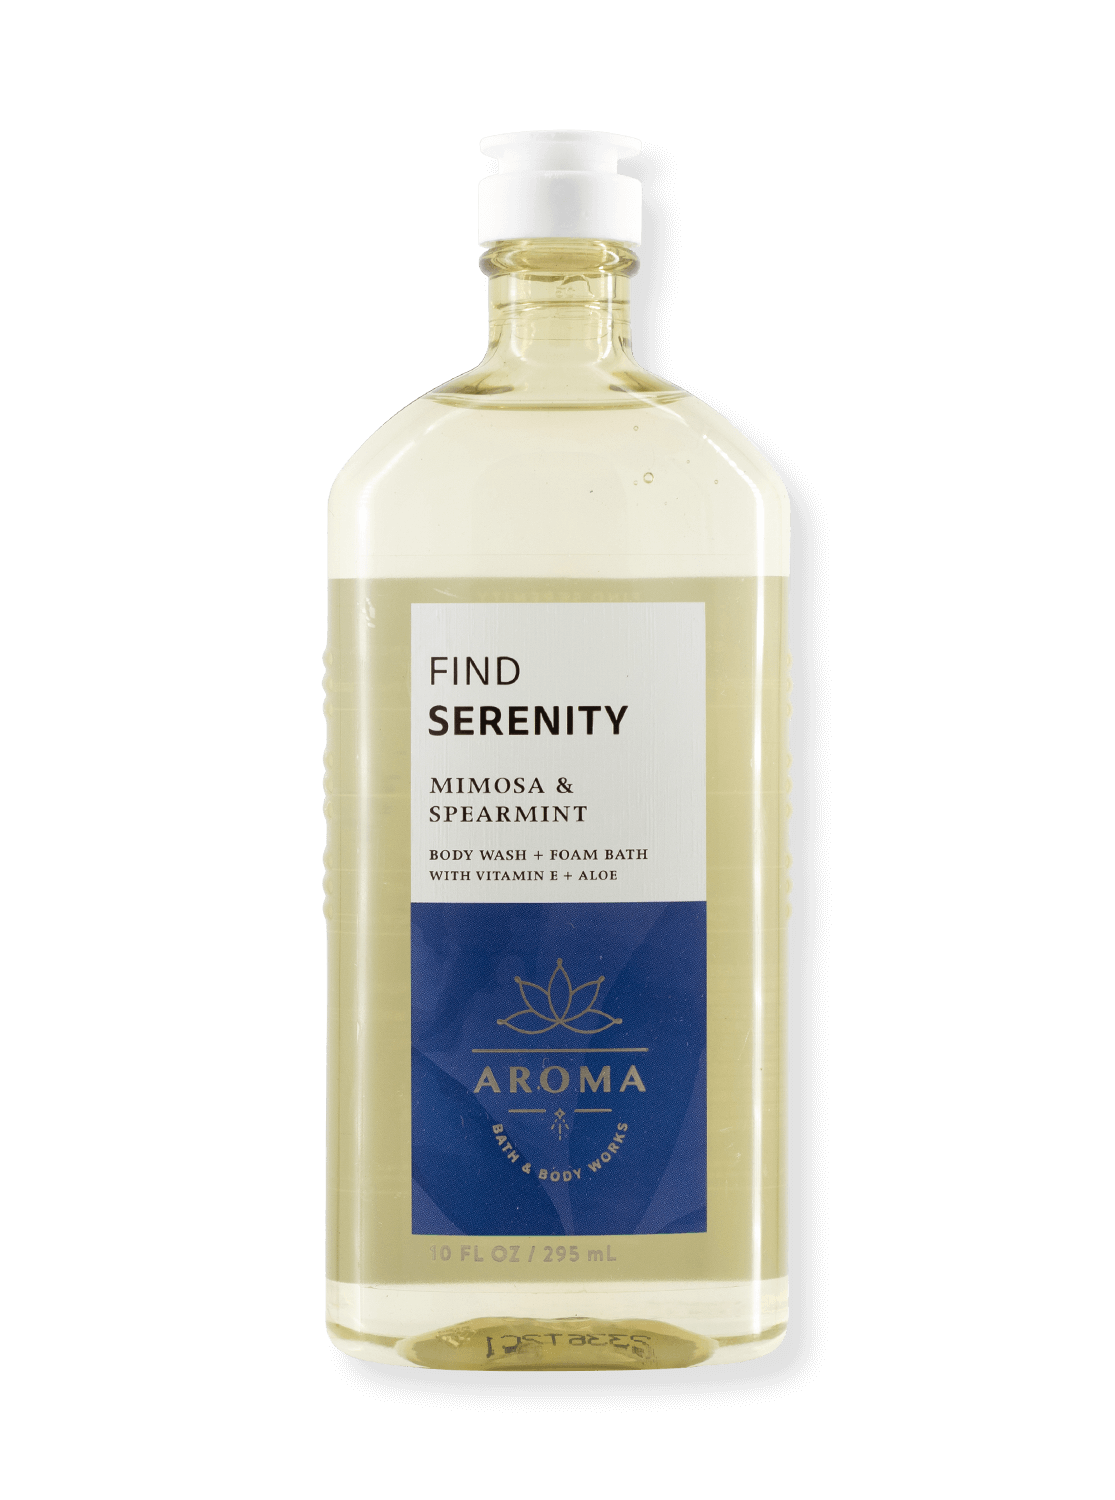 SALE - Duschgel & Schaumbad - AROMA - Find Serentity - Mimosa & Spearmint - 295ml